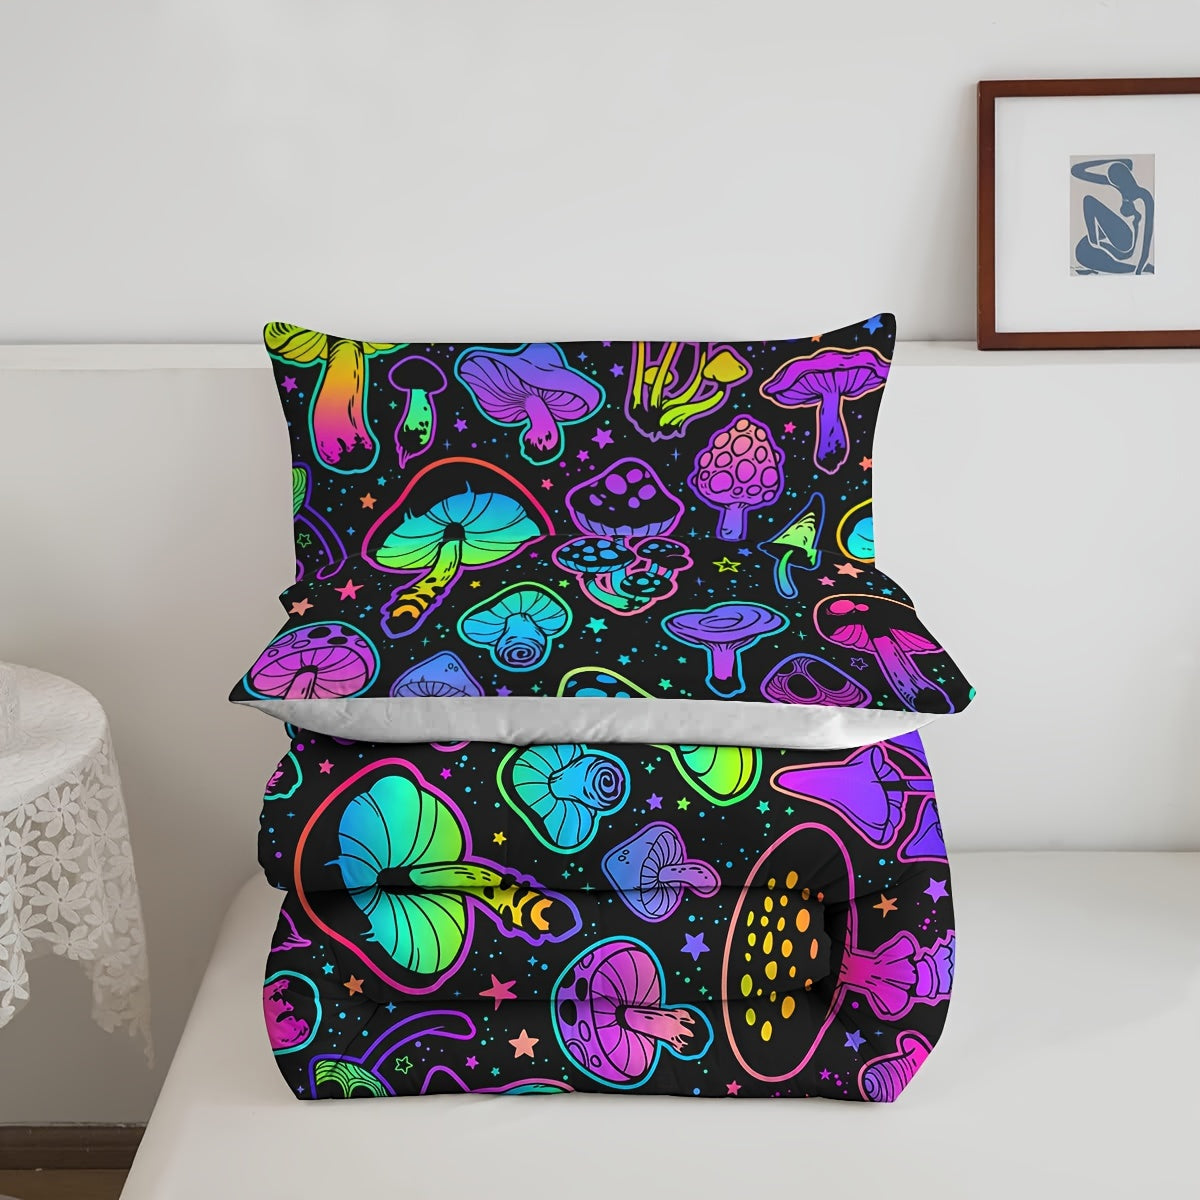 3pcs Fashion Comforter Set (1 Comforter + 2 Pillowcase, No Core), Mushroom Pattern Printed Comforter For All Seasons, Soft And Comfortable For Home Dorm Room Use